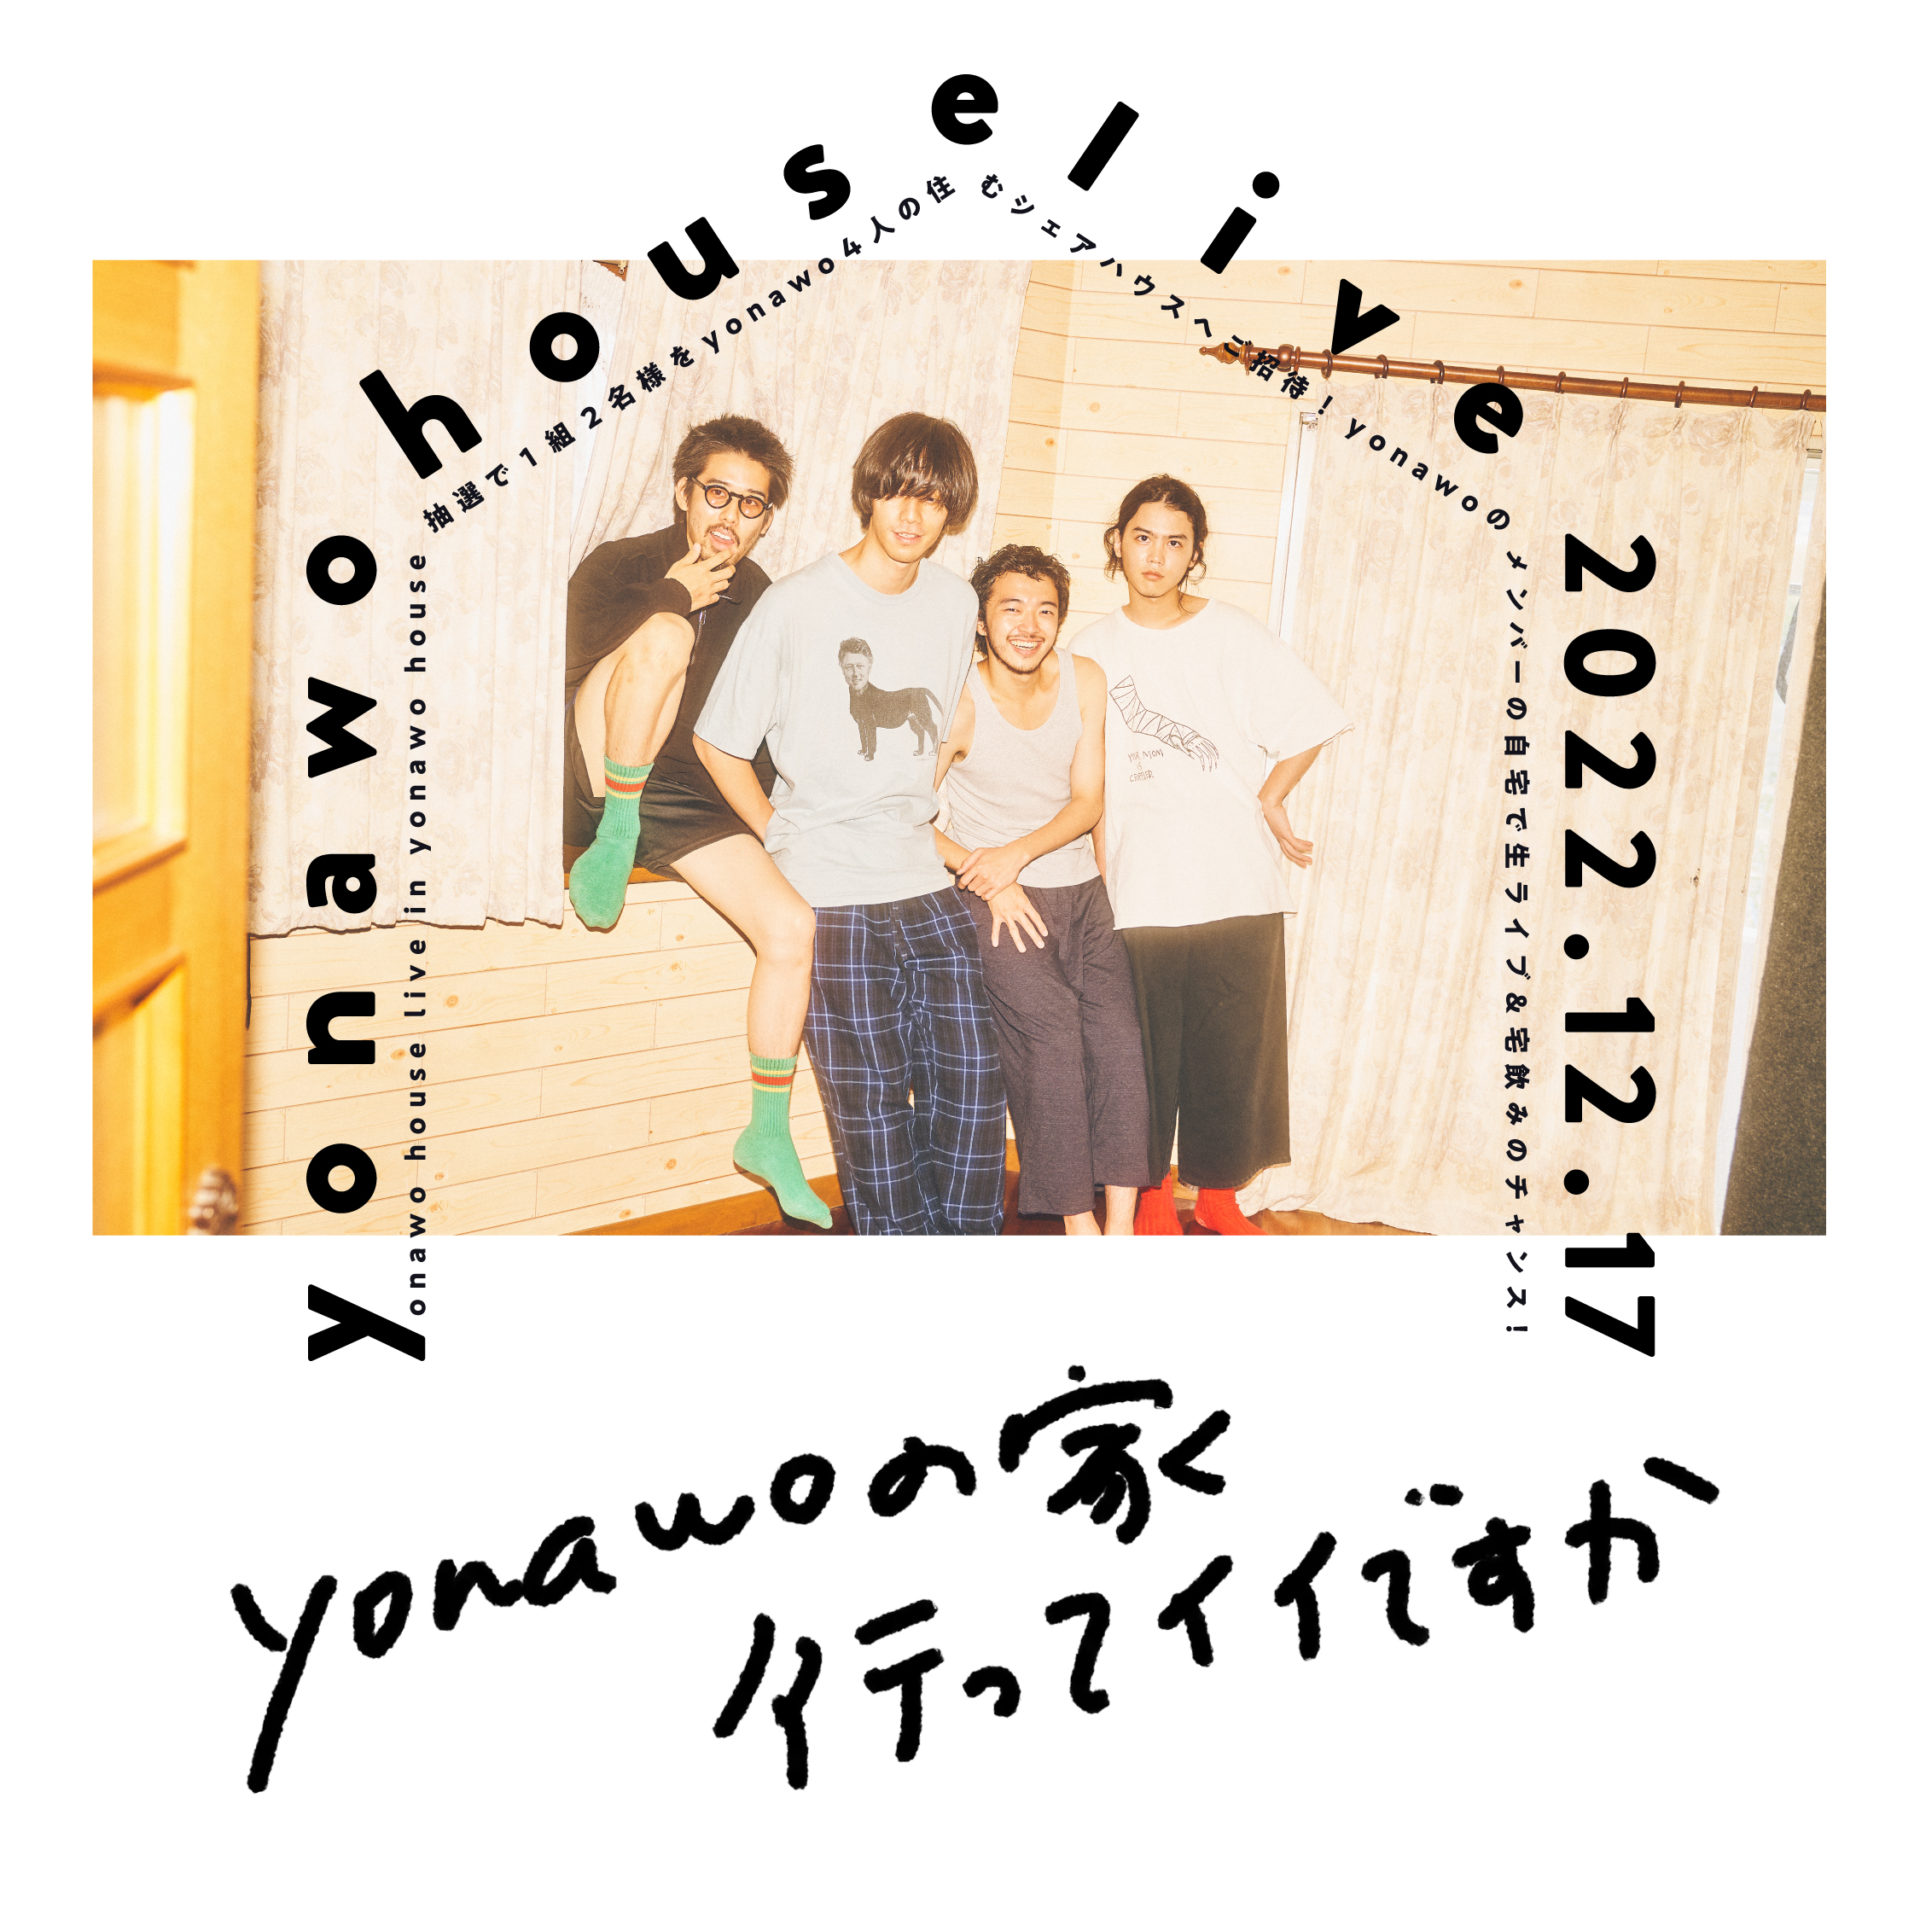 yonawo - Yonawo House [LP] - 邦楽